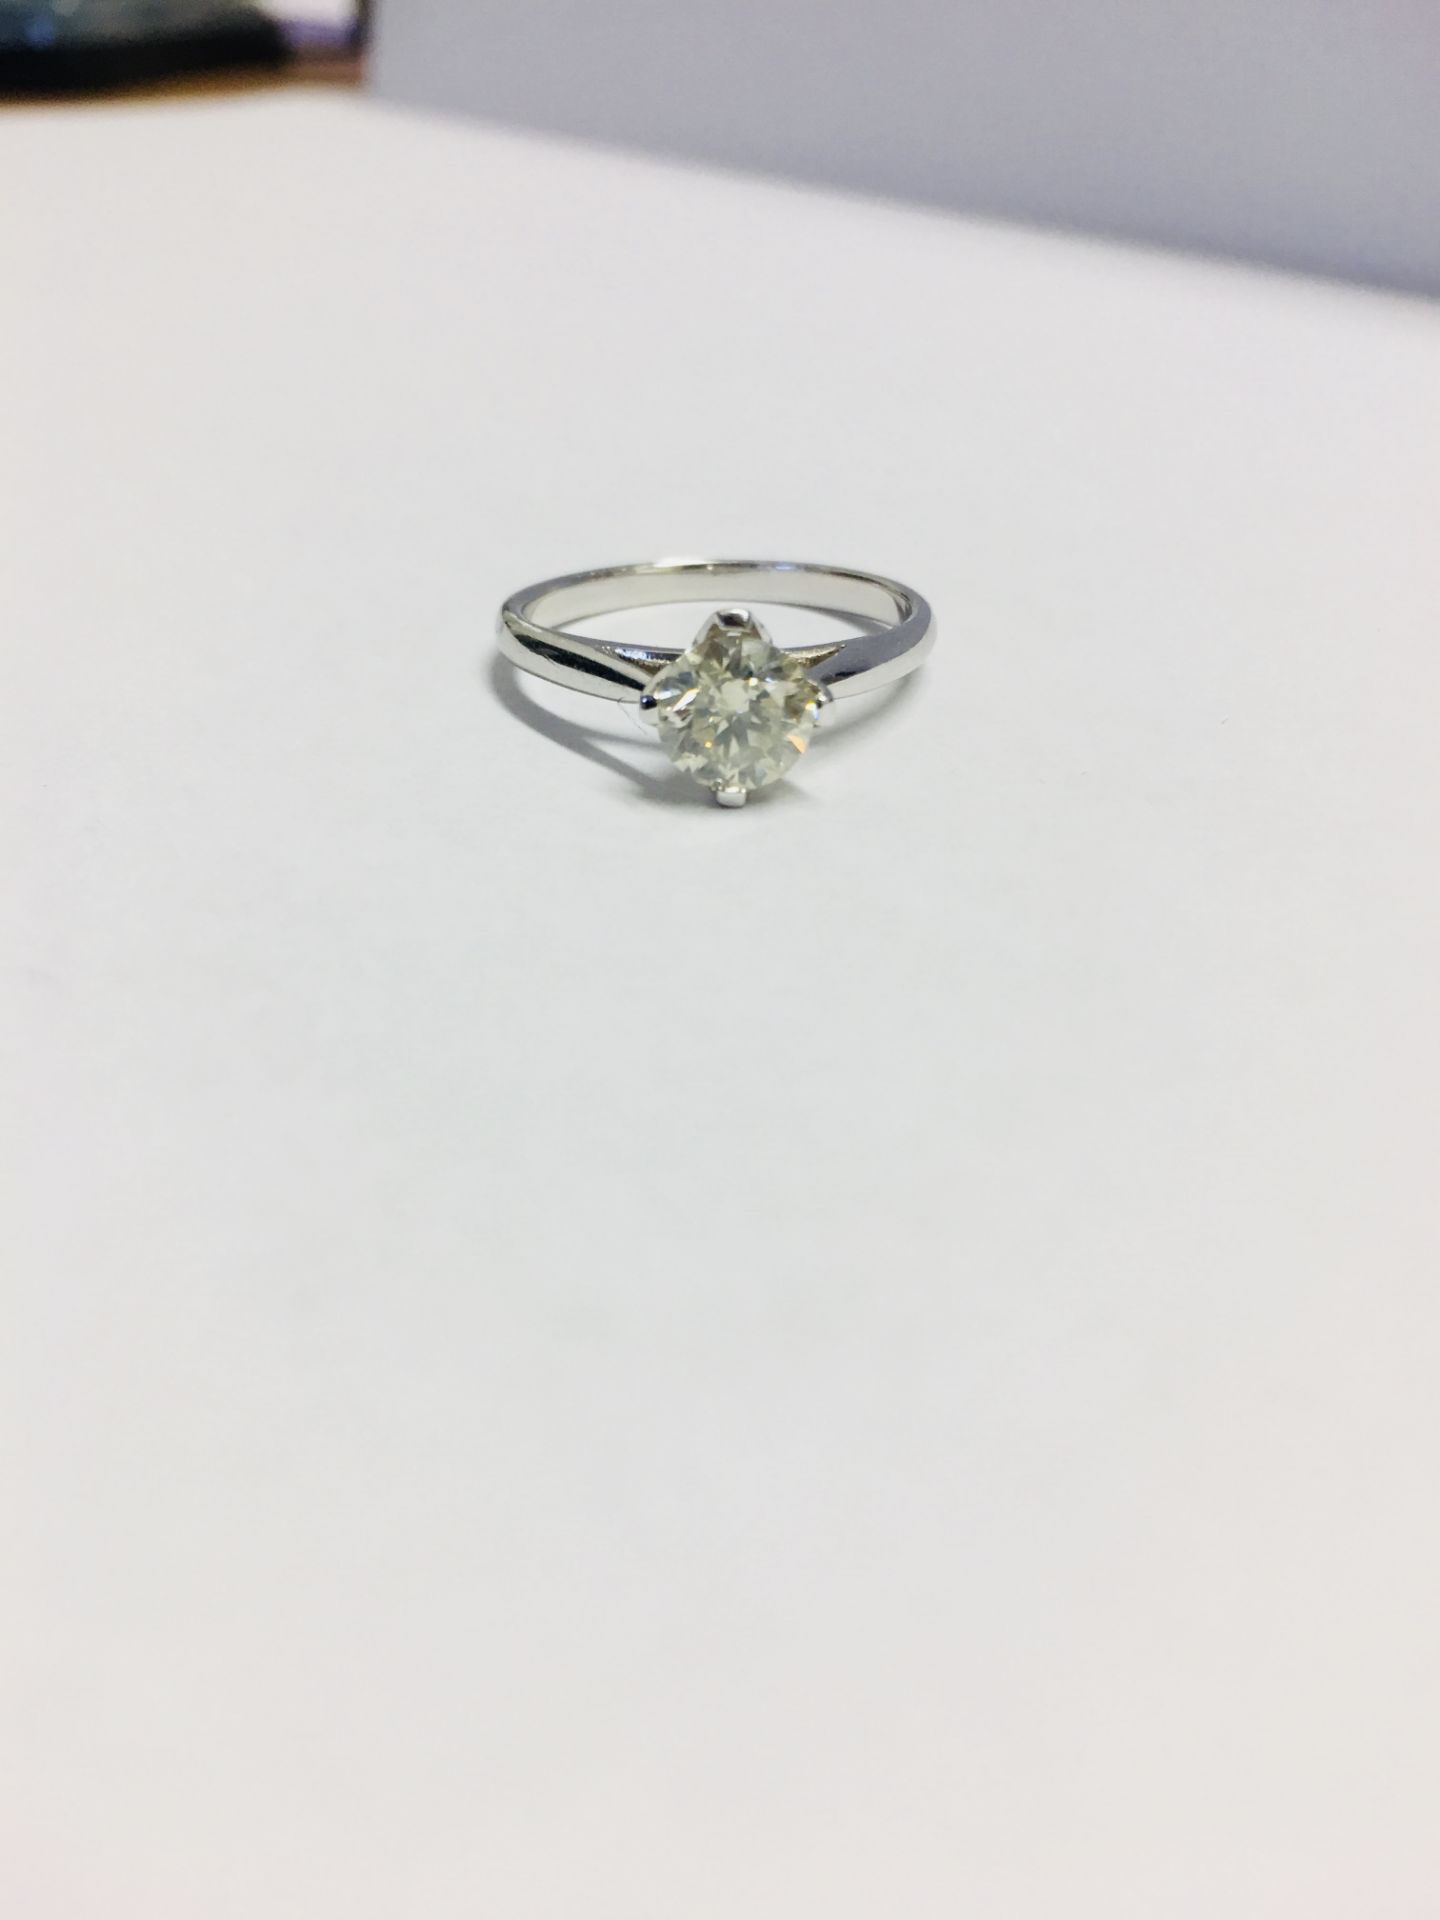 0.87ct Briliant cut diamond,J colour si2 clarity,Platinum setting,uk London hallmark,950,uk size K, - Image 4 of 4